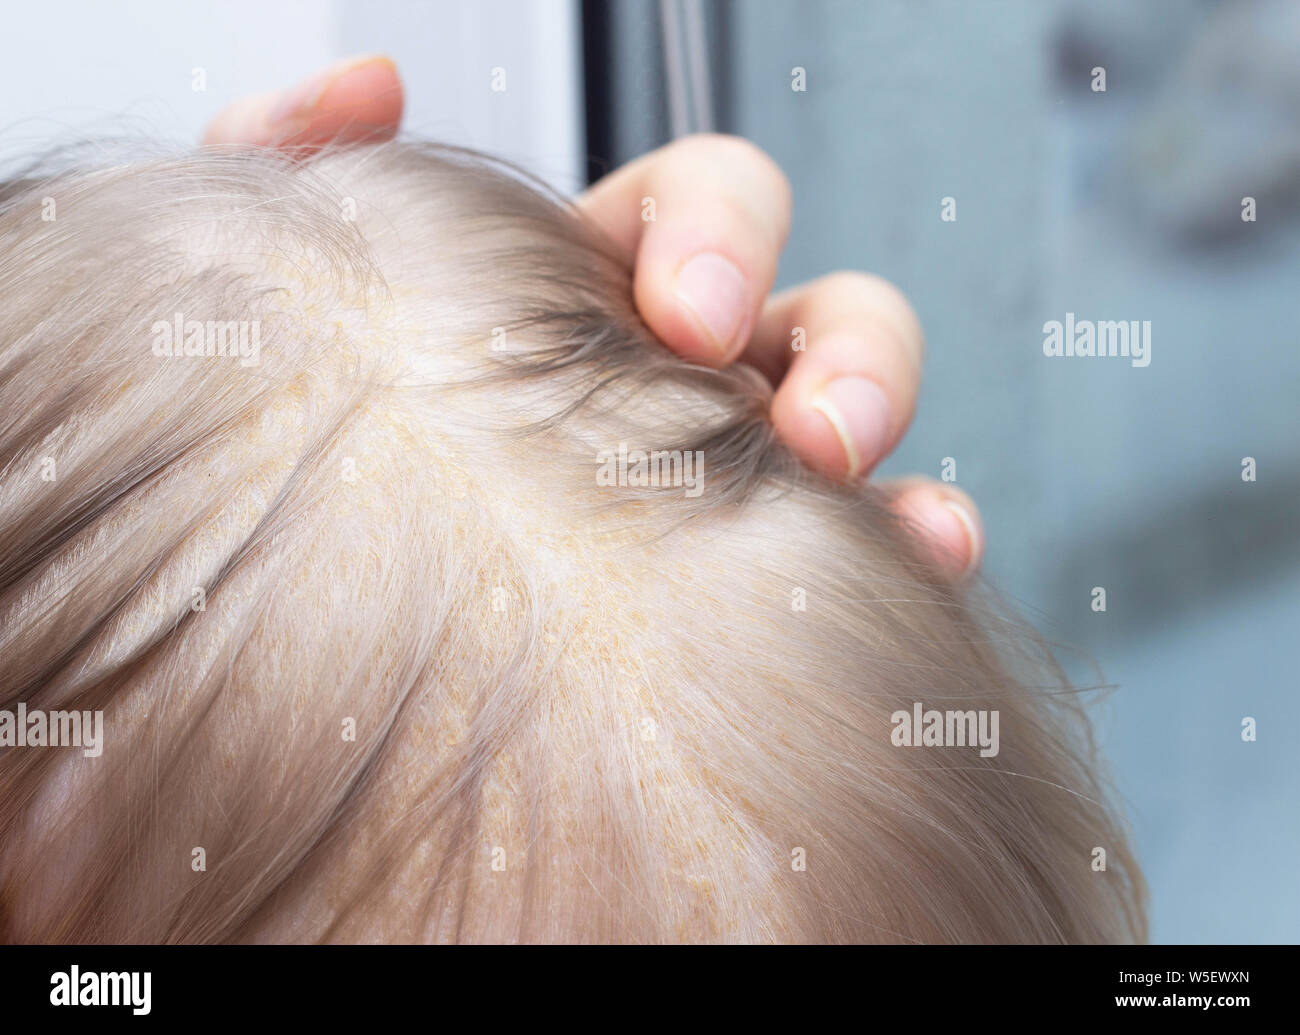 Fungal skin disease seborrheic dermatitis in a child's head, close-up, seborrhea crust Stock Photo